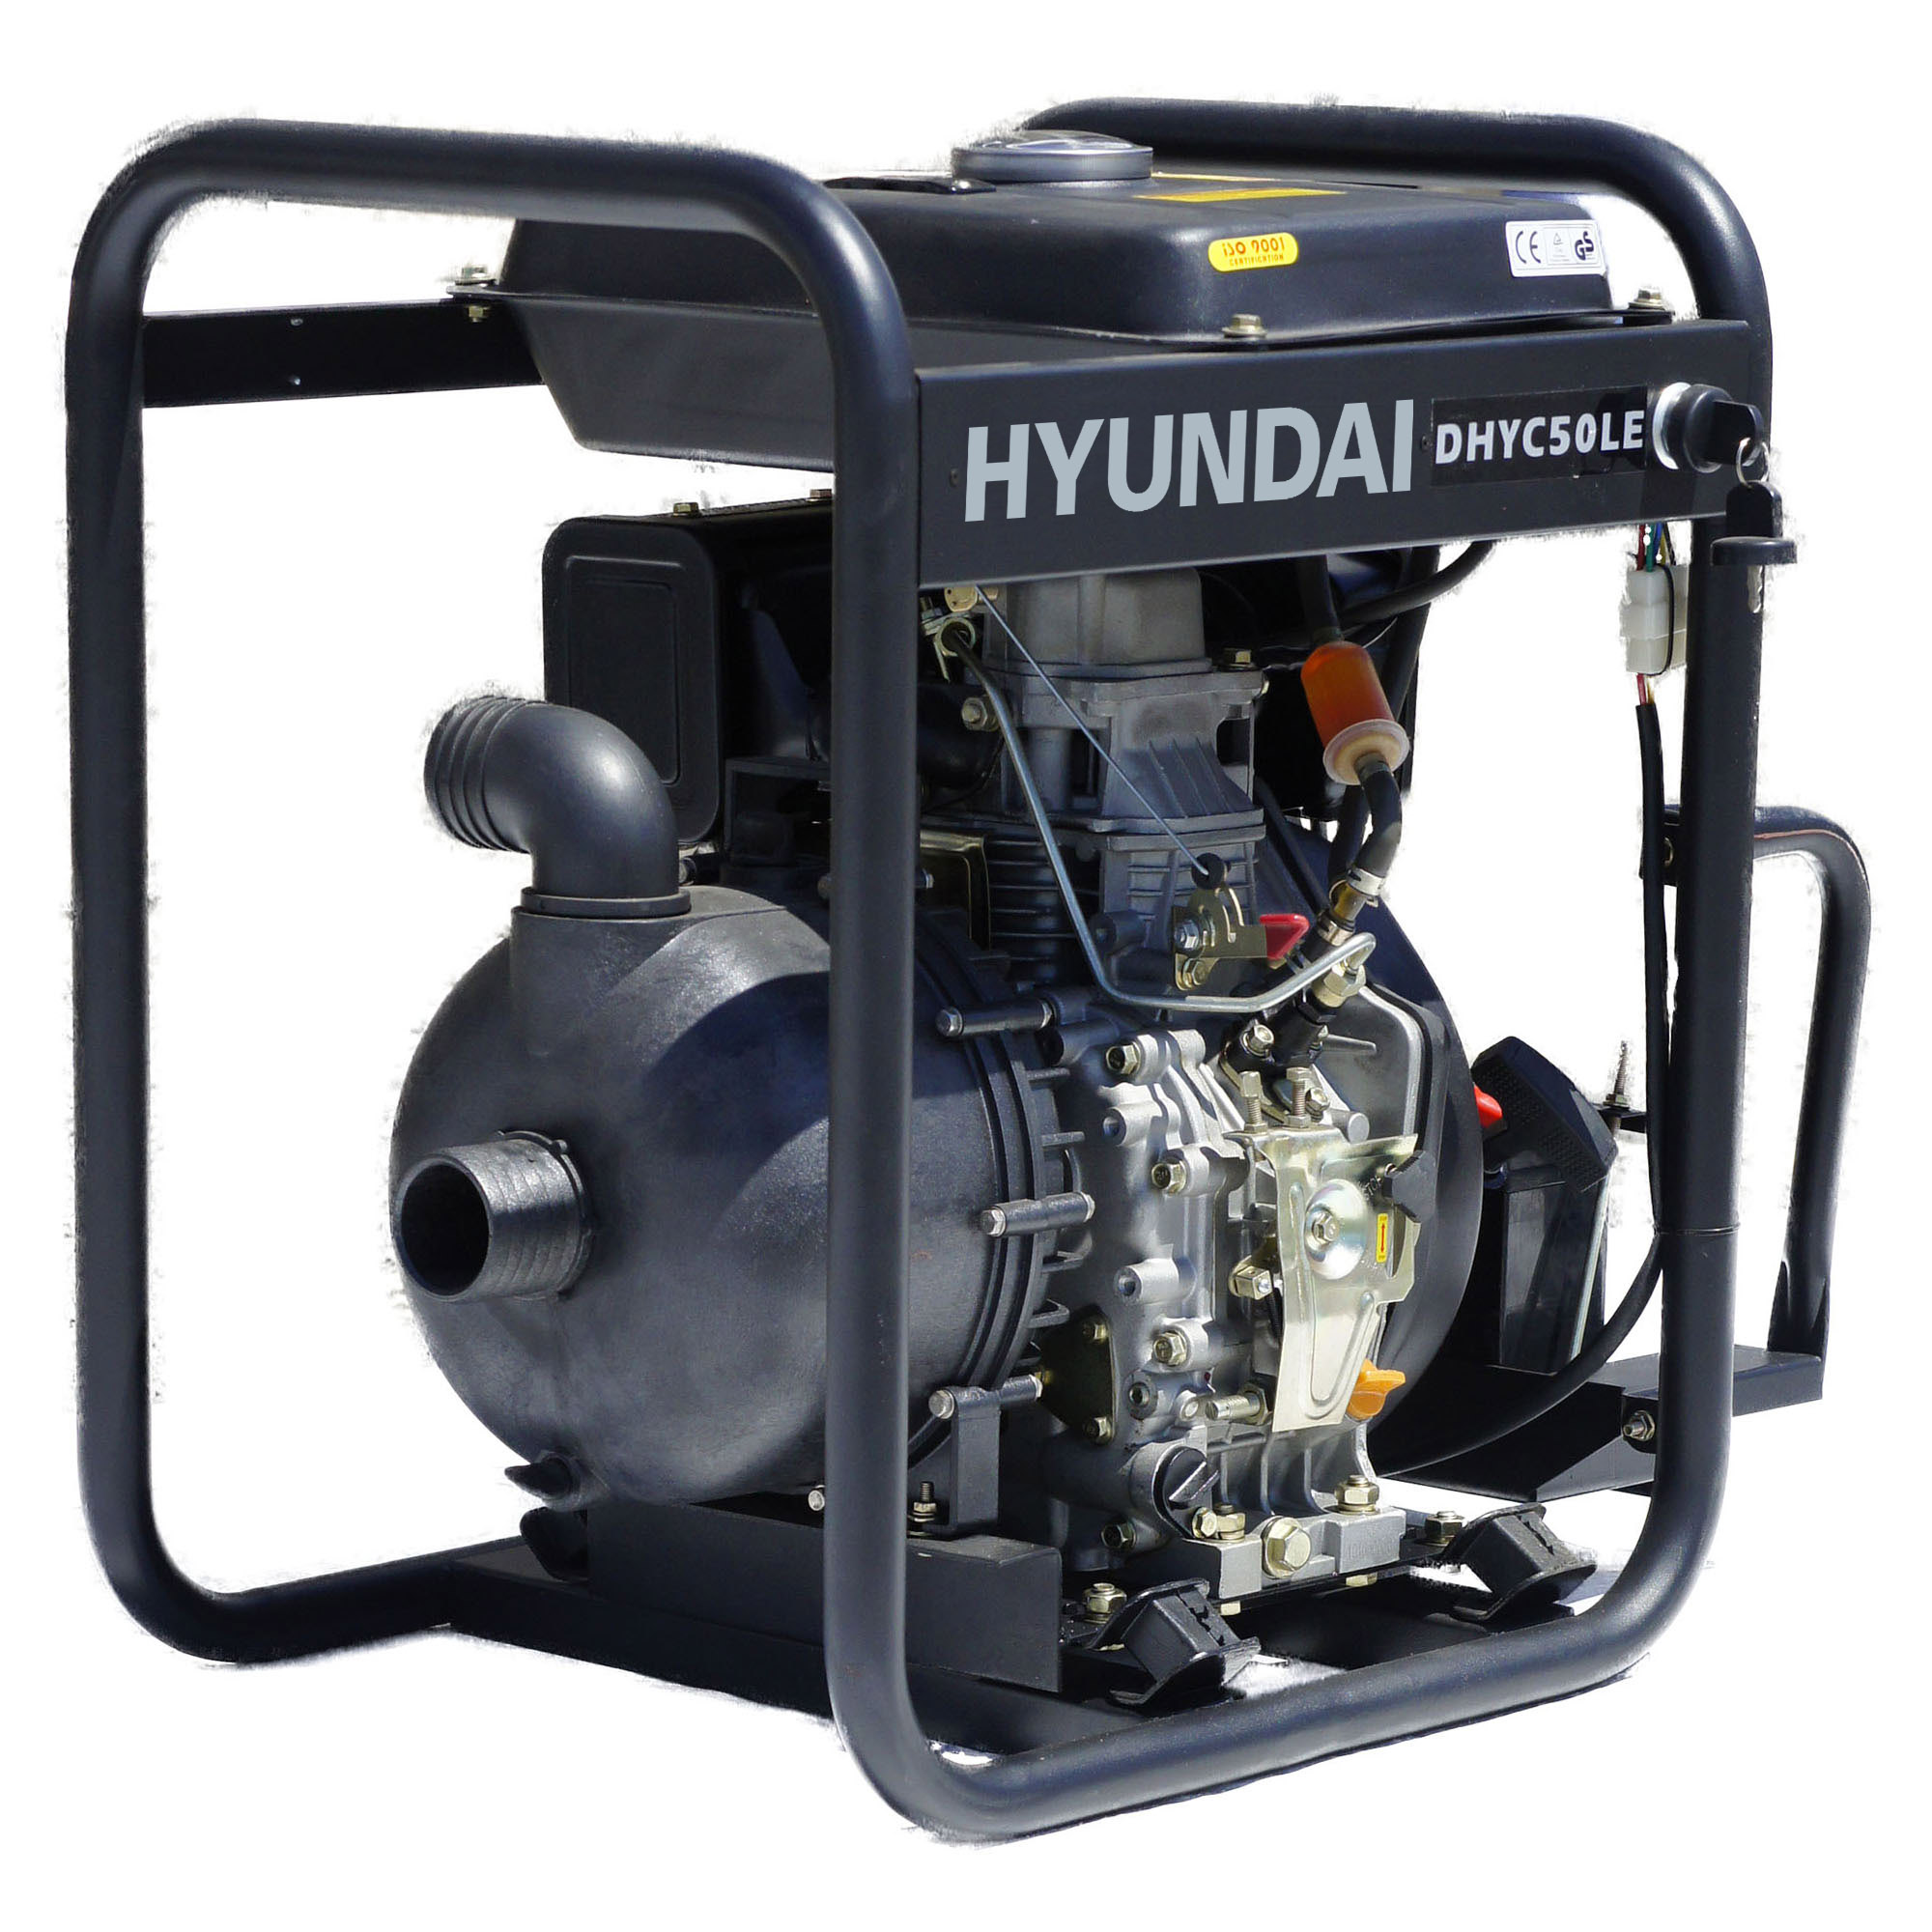 Hyundai DHYC50LE 50mm 2? Electric Start Diesel Chemical Water Pump